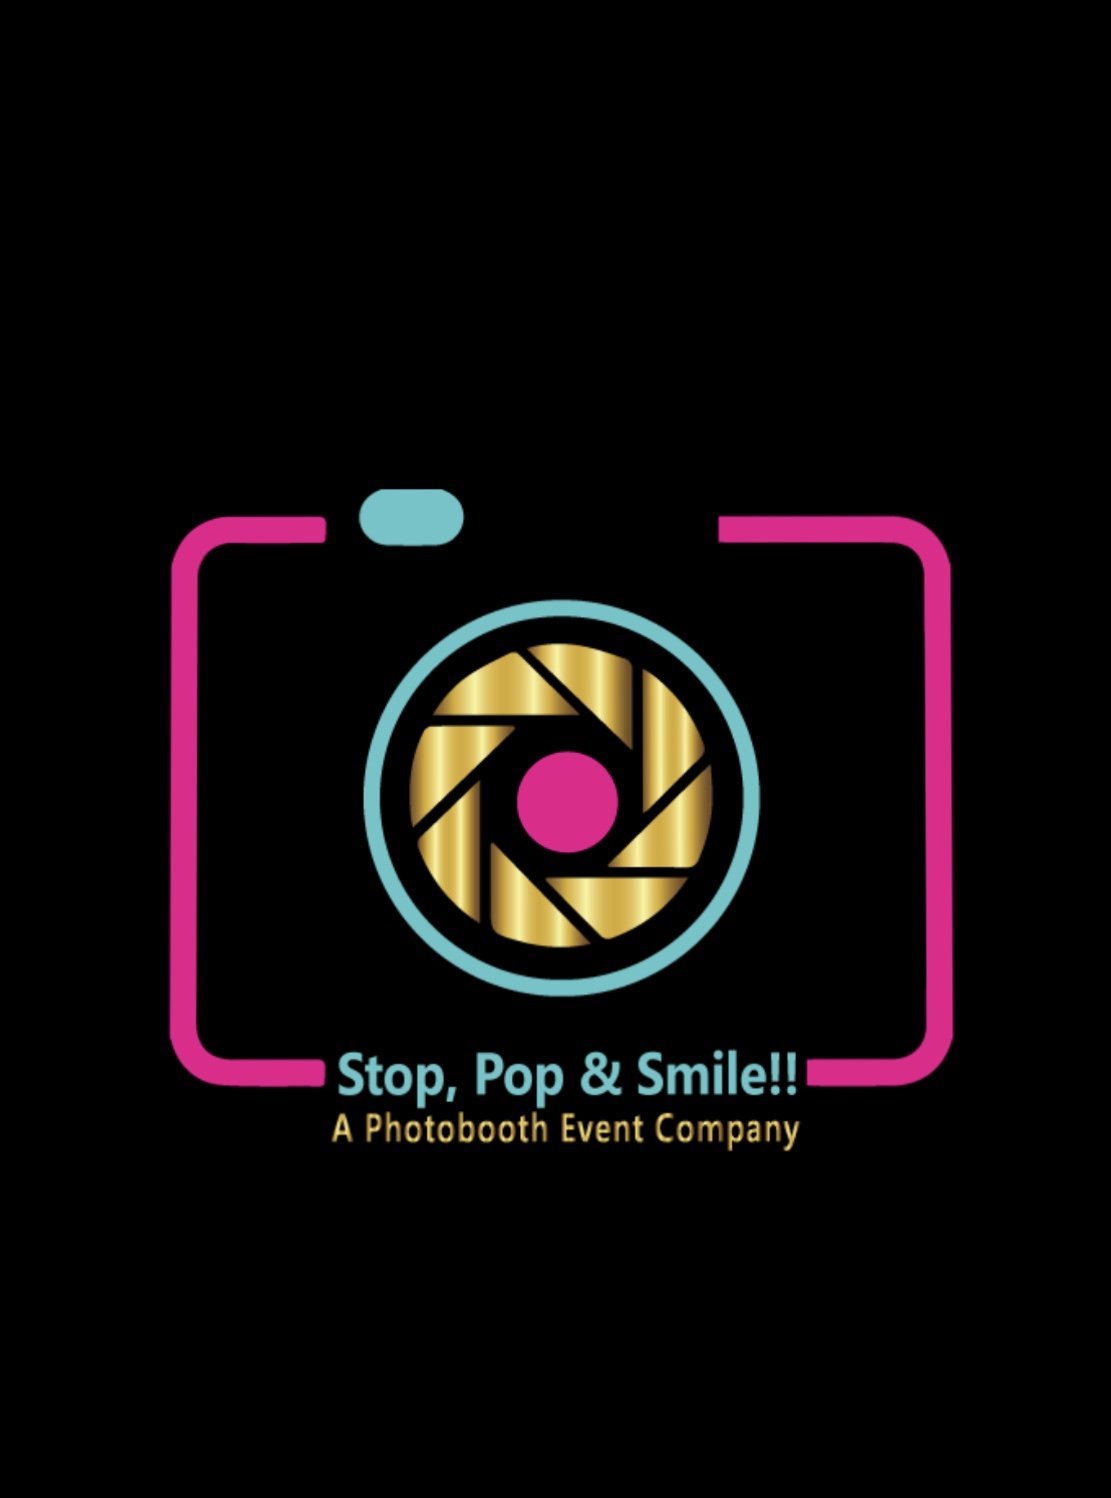 STOP, POP &amp; SMILE PHOTOBOOTH COMPANY